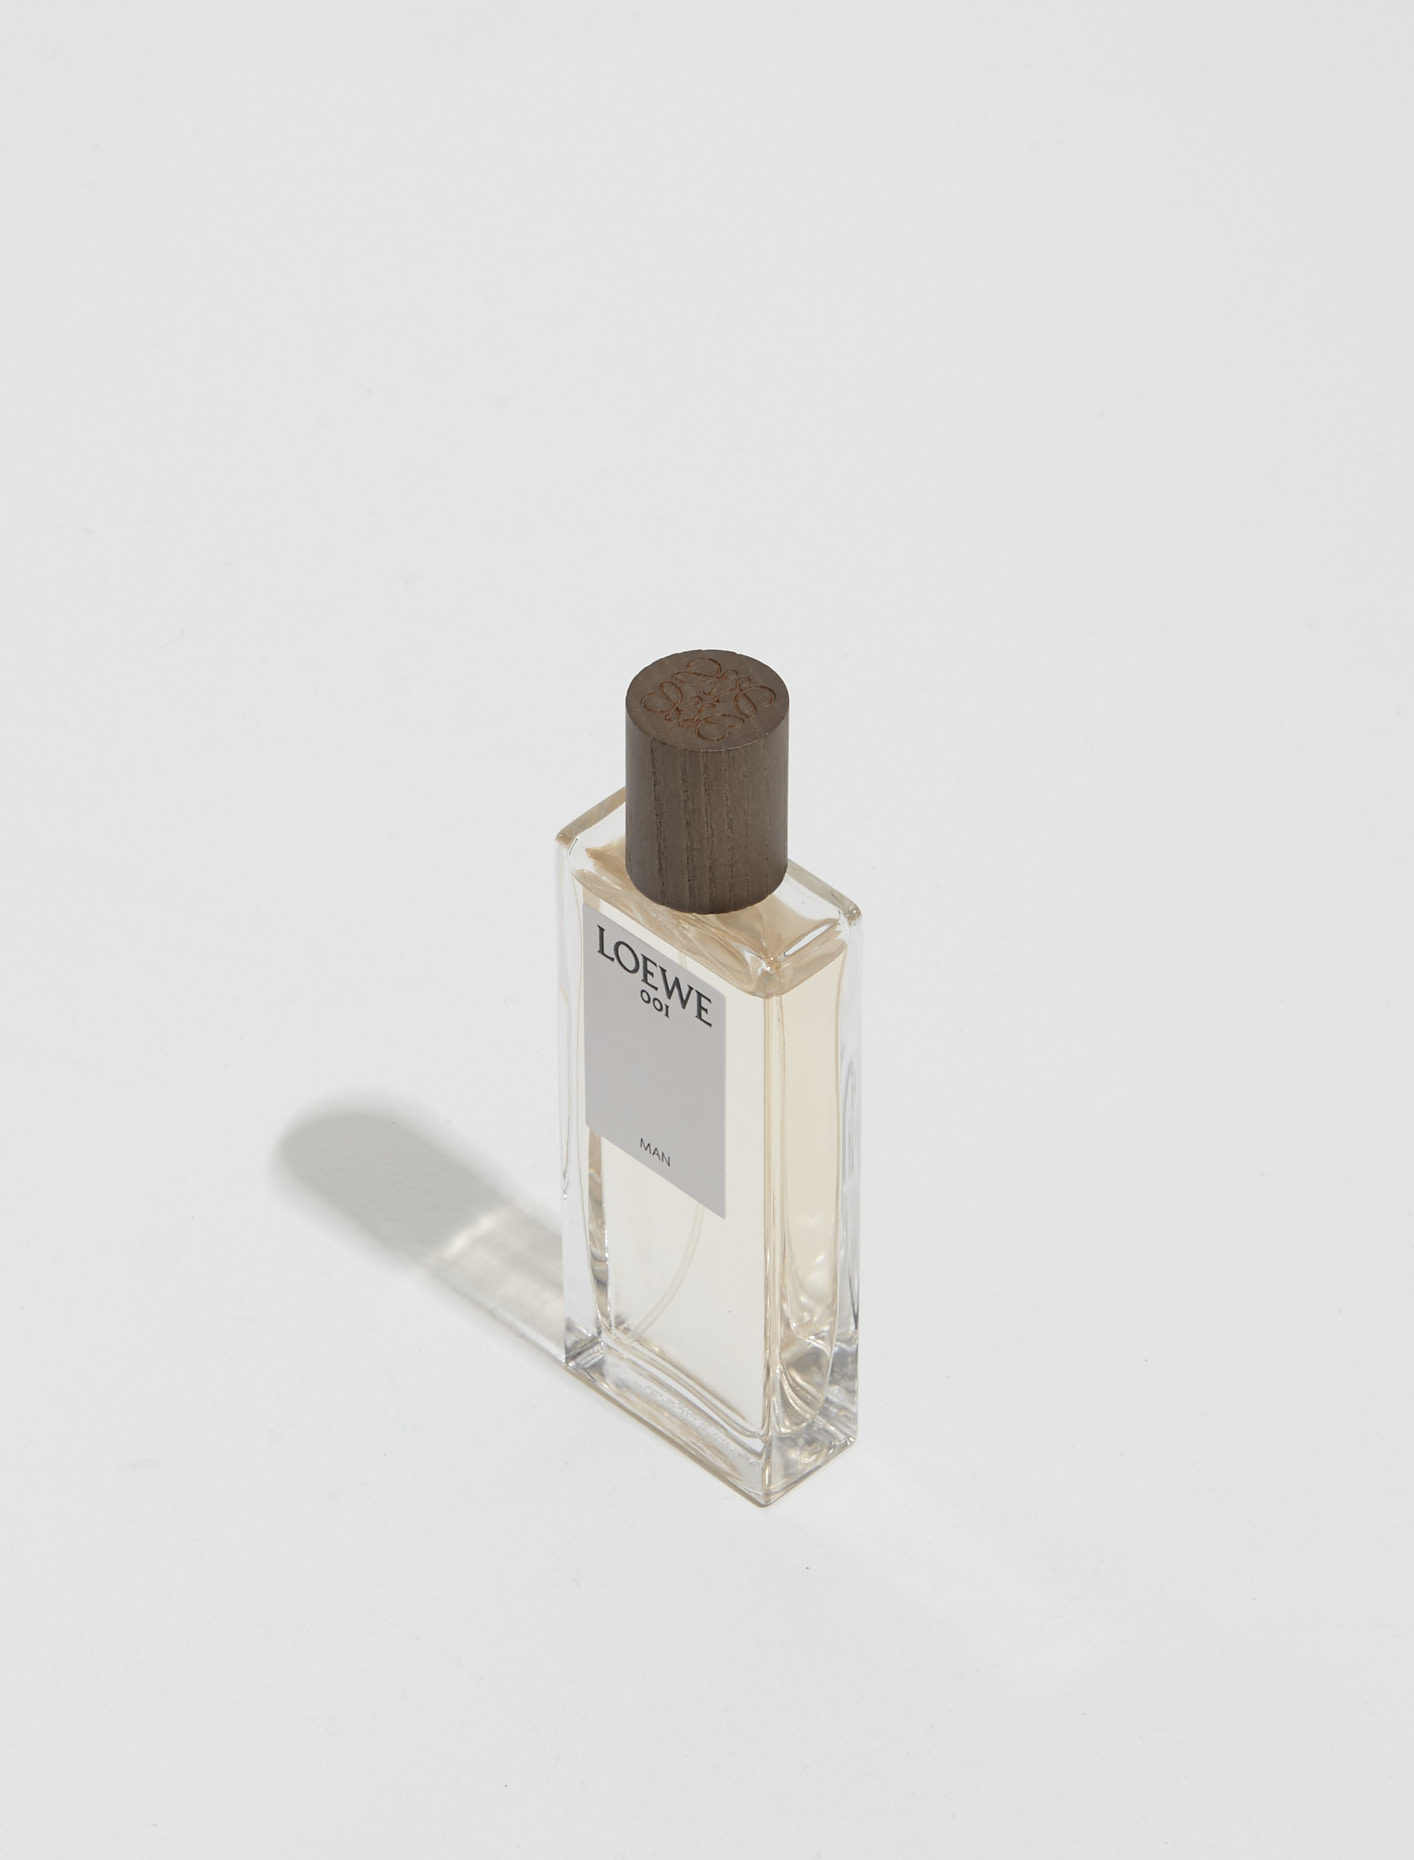 Loewe 001 Man Eau de Parfum, Voo Store Berlin